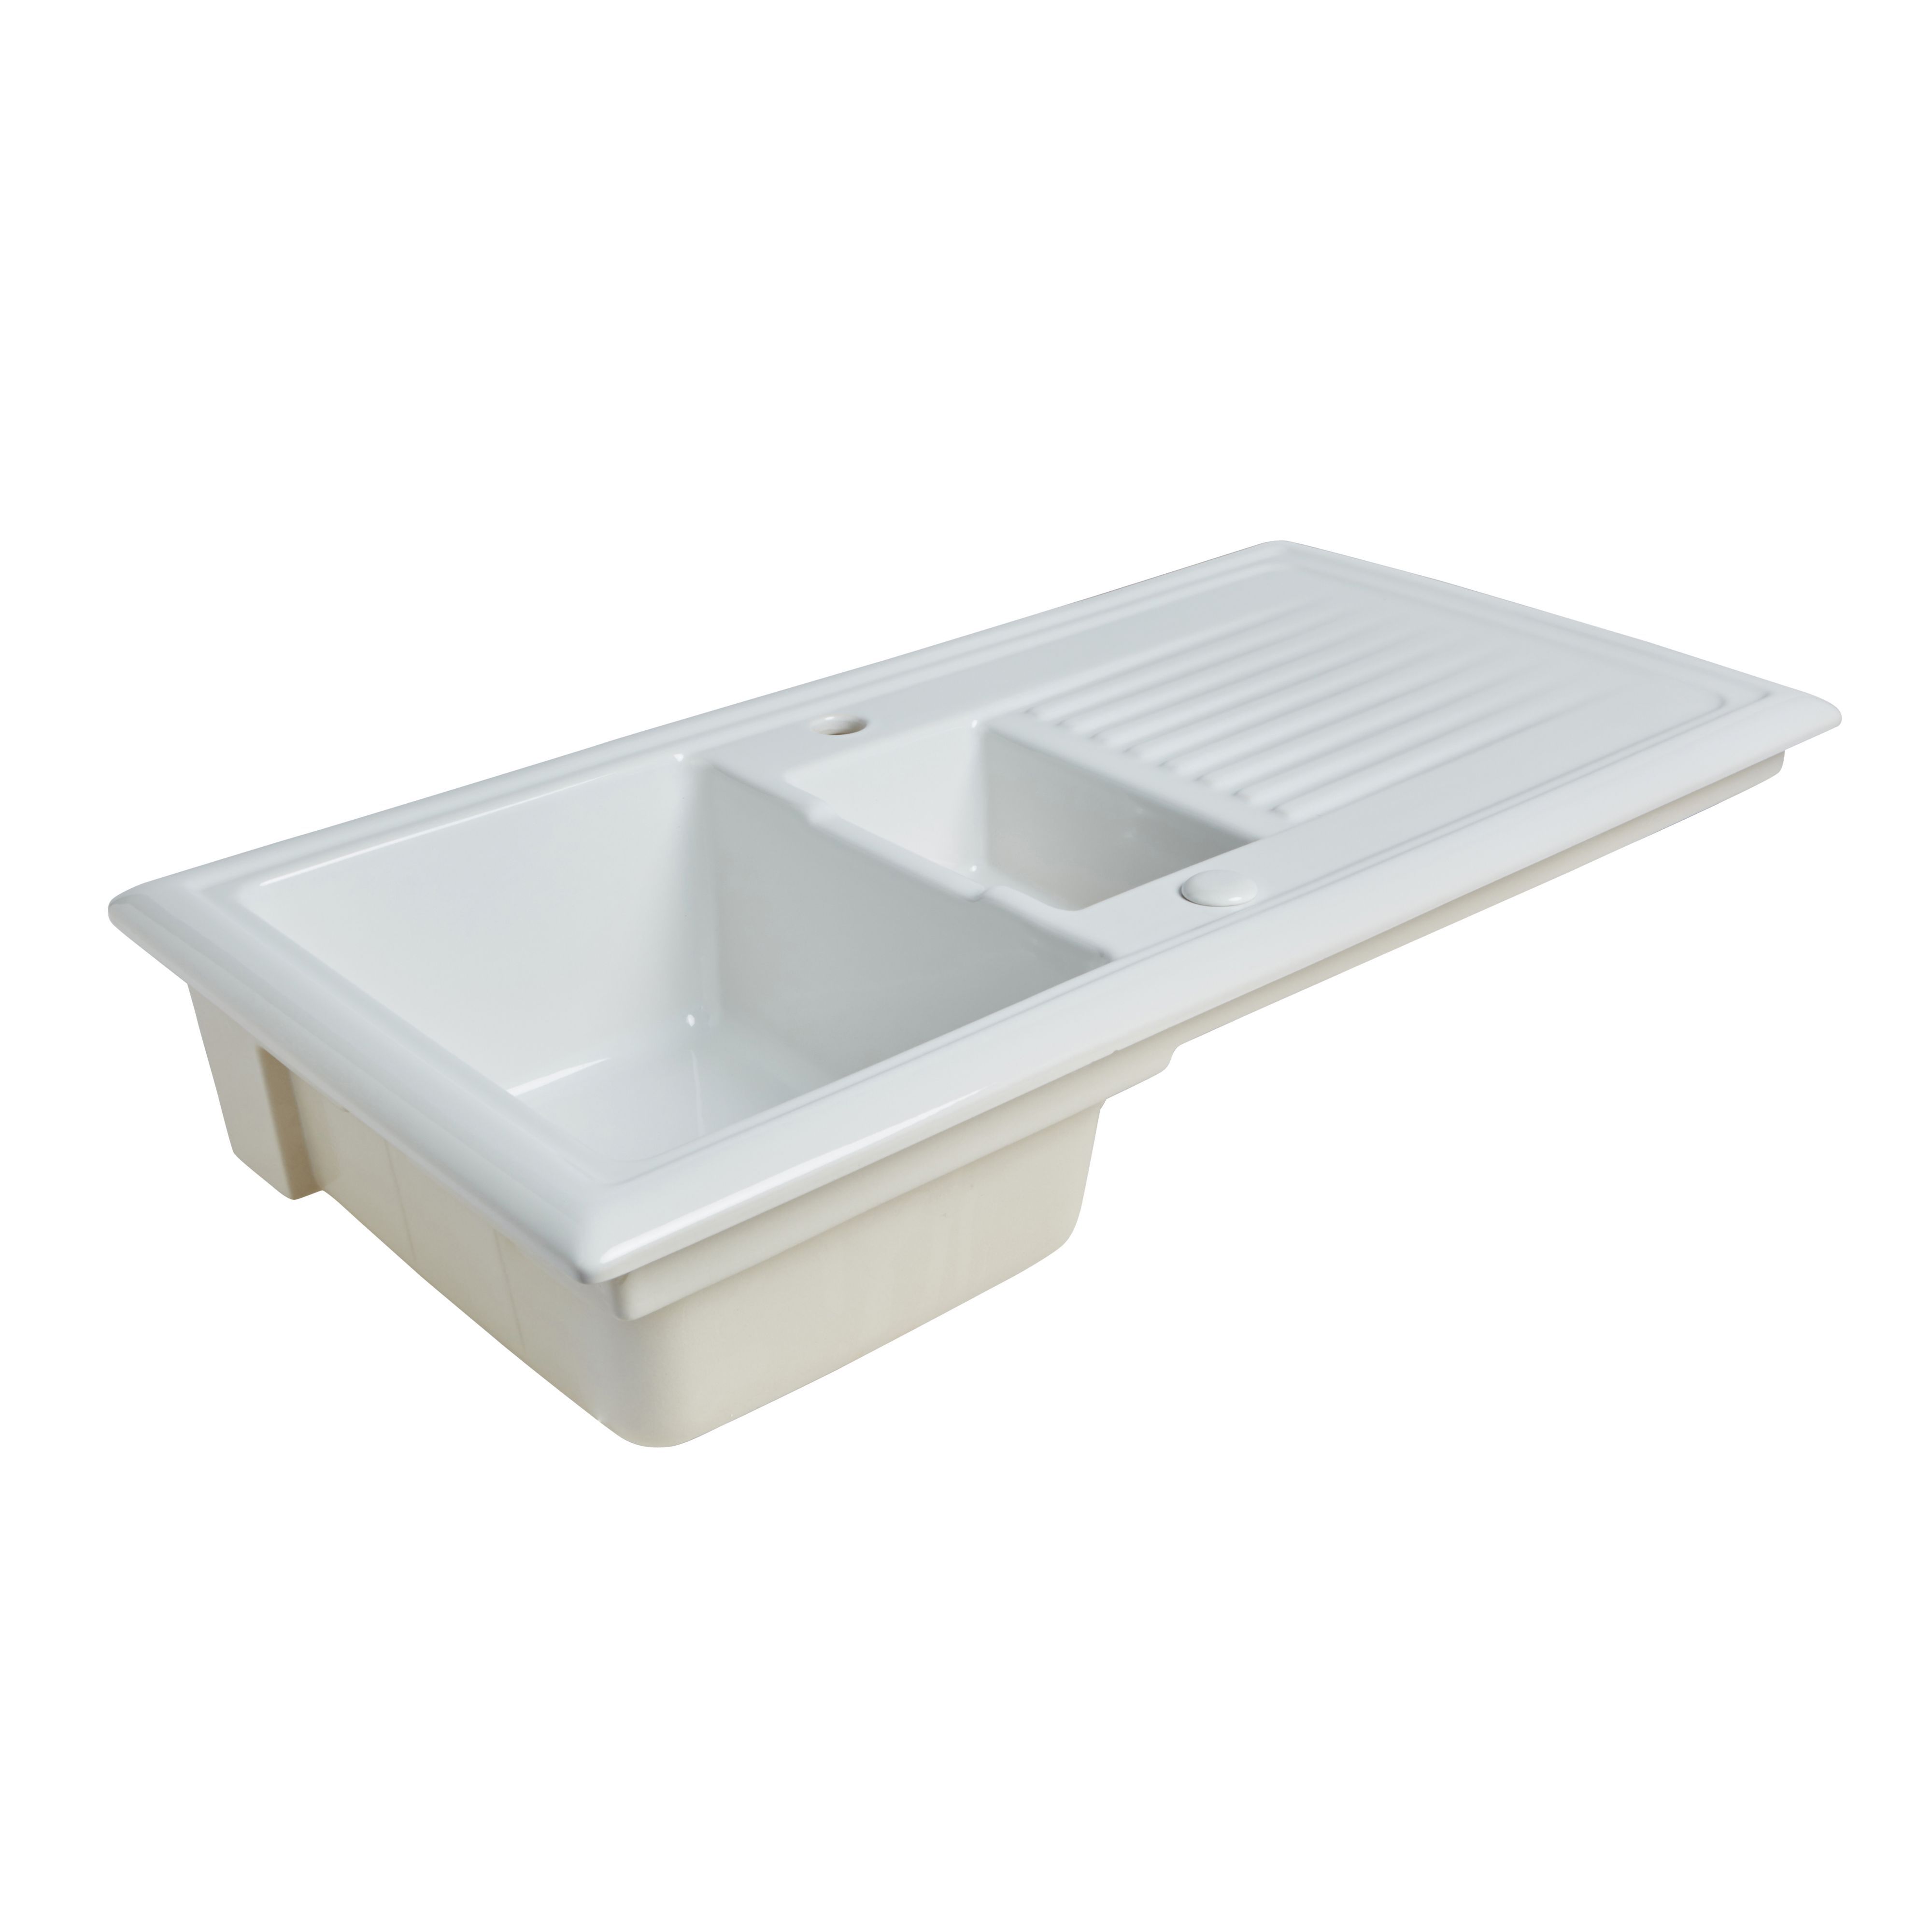 Cooke & Lewis Burbank White Ceramic 1.5 Bowl Sink & drainer 525mm x 1010mm